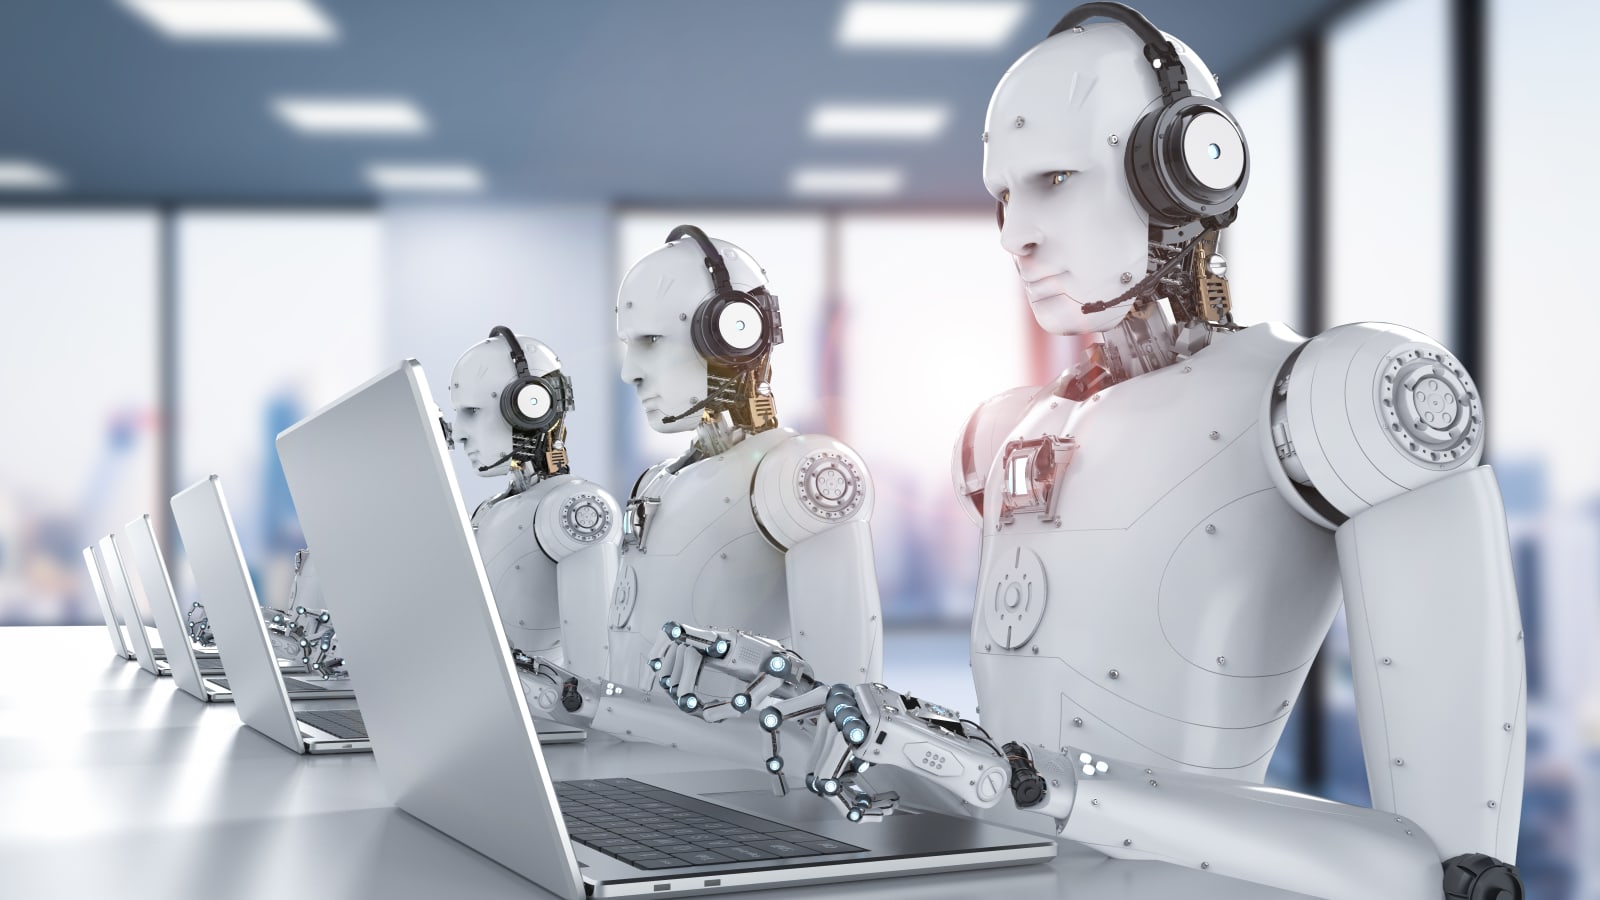 Stifte bekendtskab Øde Beregning Robots could take over 20 million jobs by 2030, study claims